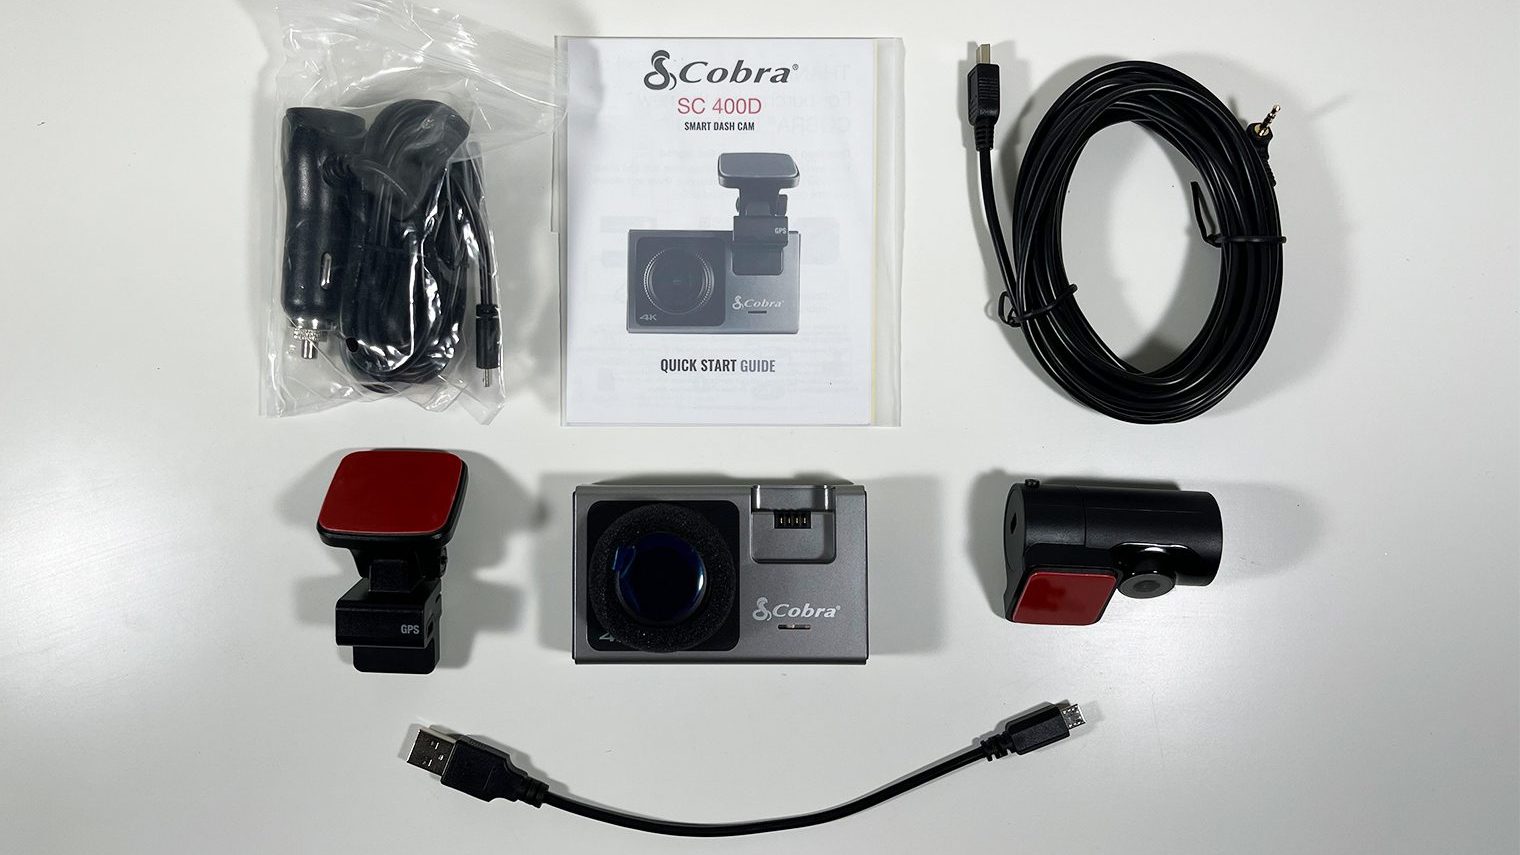 SC 400D Smart Dash Cam - Cobra Electronics